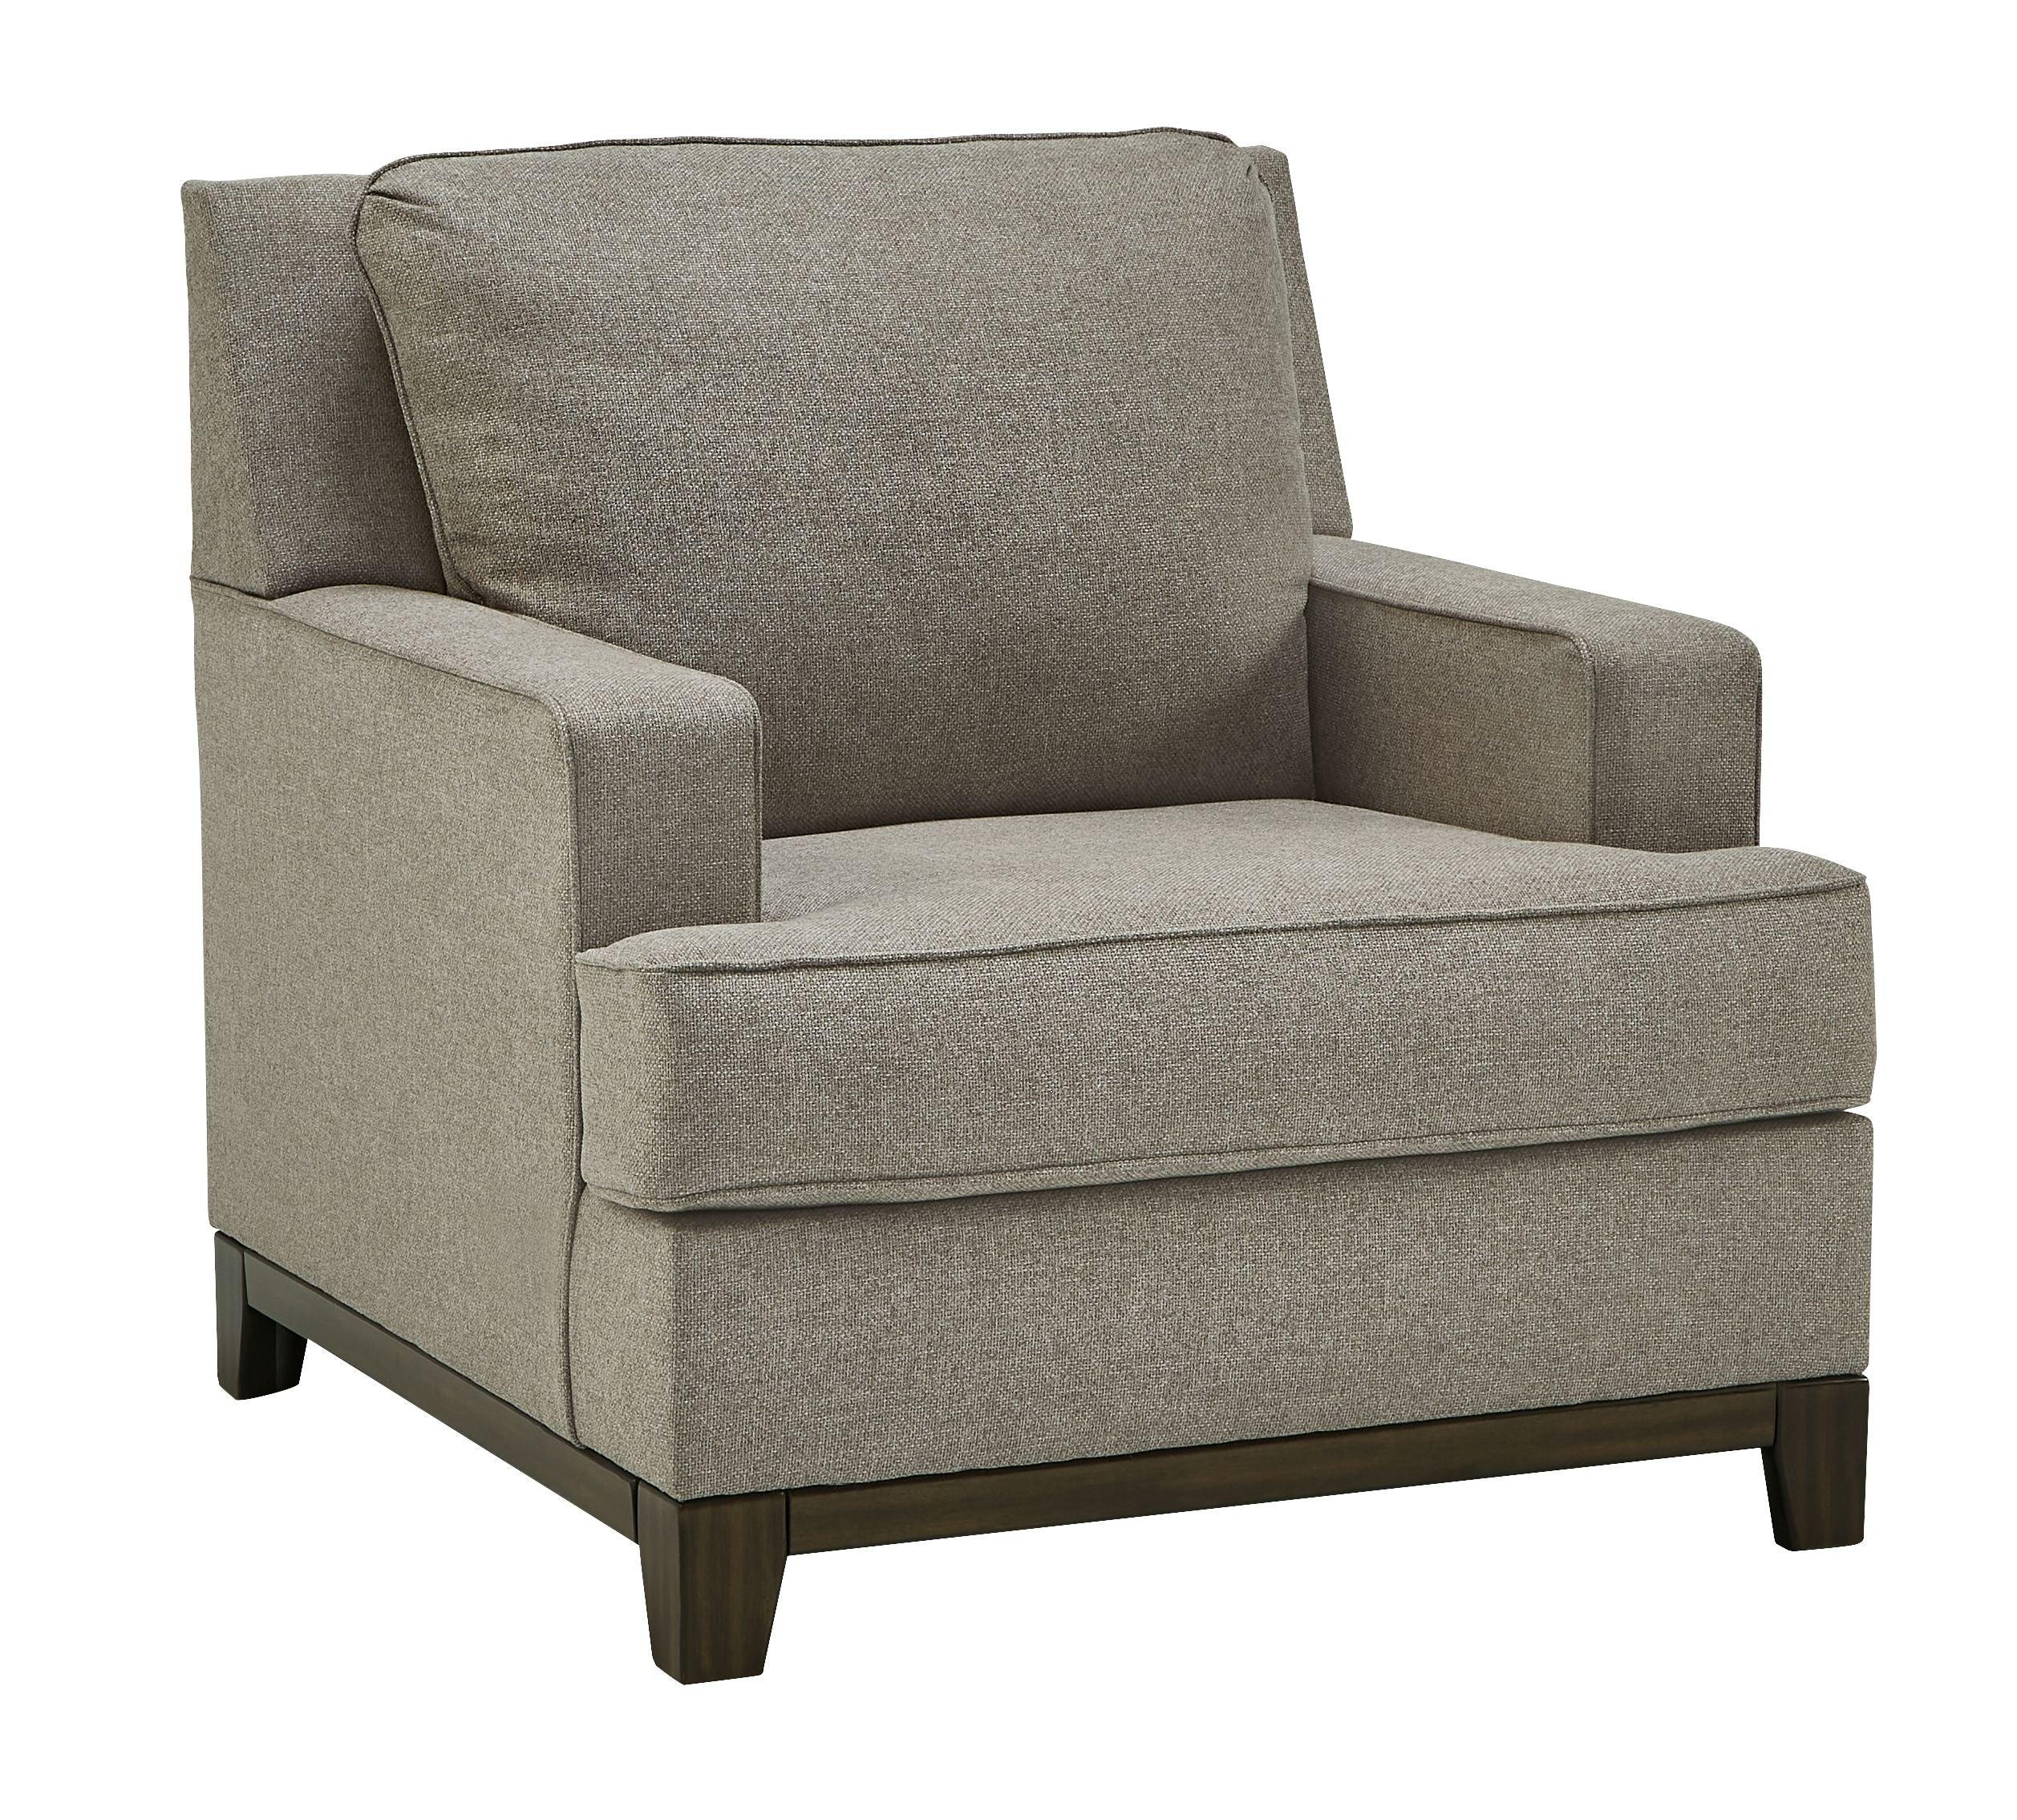 Ashley Furniture - Kaywood - Granite - Chair - 5th Avenue Furniture